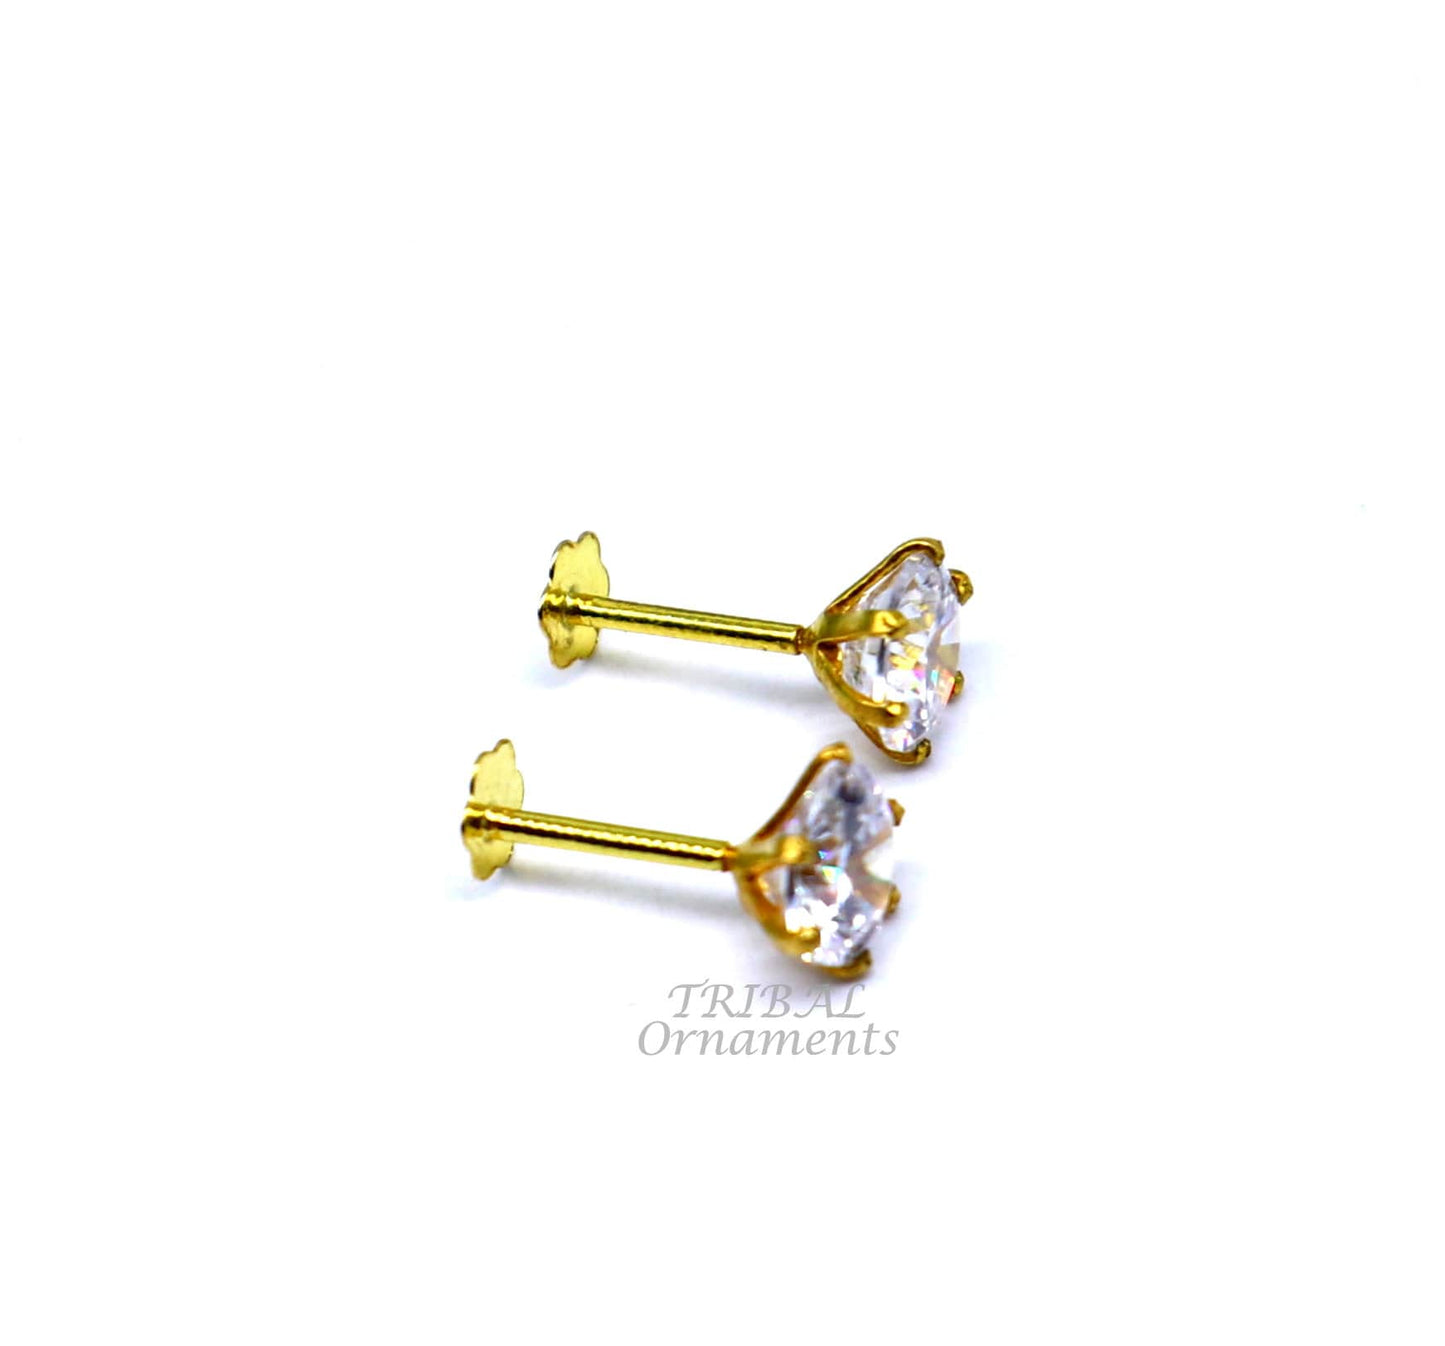 5mm 18kt yellow gold handmade single stone round shape stud earring cartilage earring customized unisex screw back stud jewelry er149 - TRIBAL ORNAMENTS